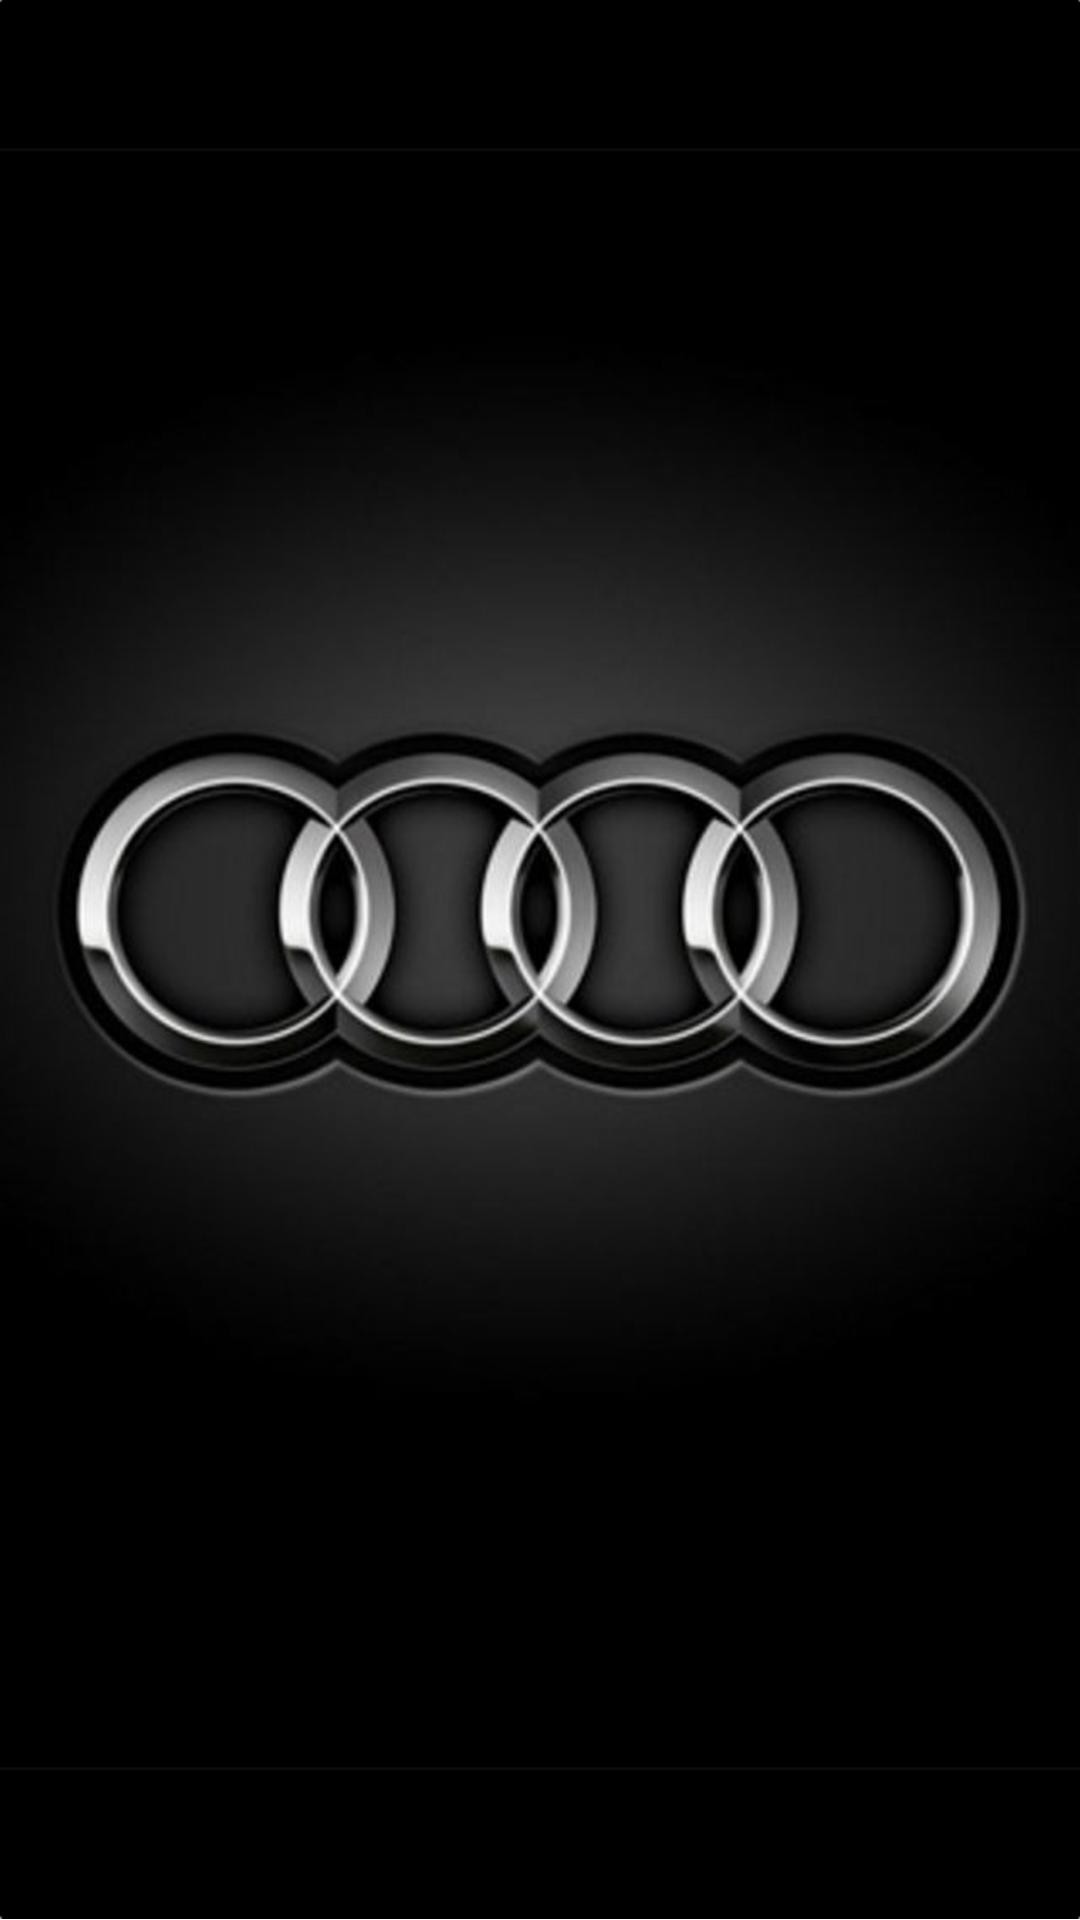 1080x1920 ... Audi Car Logo iPhone 7 Plus HD Wallpaper ...